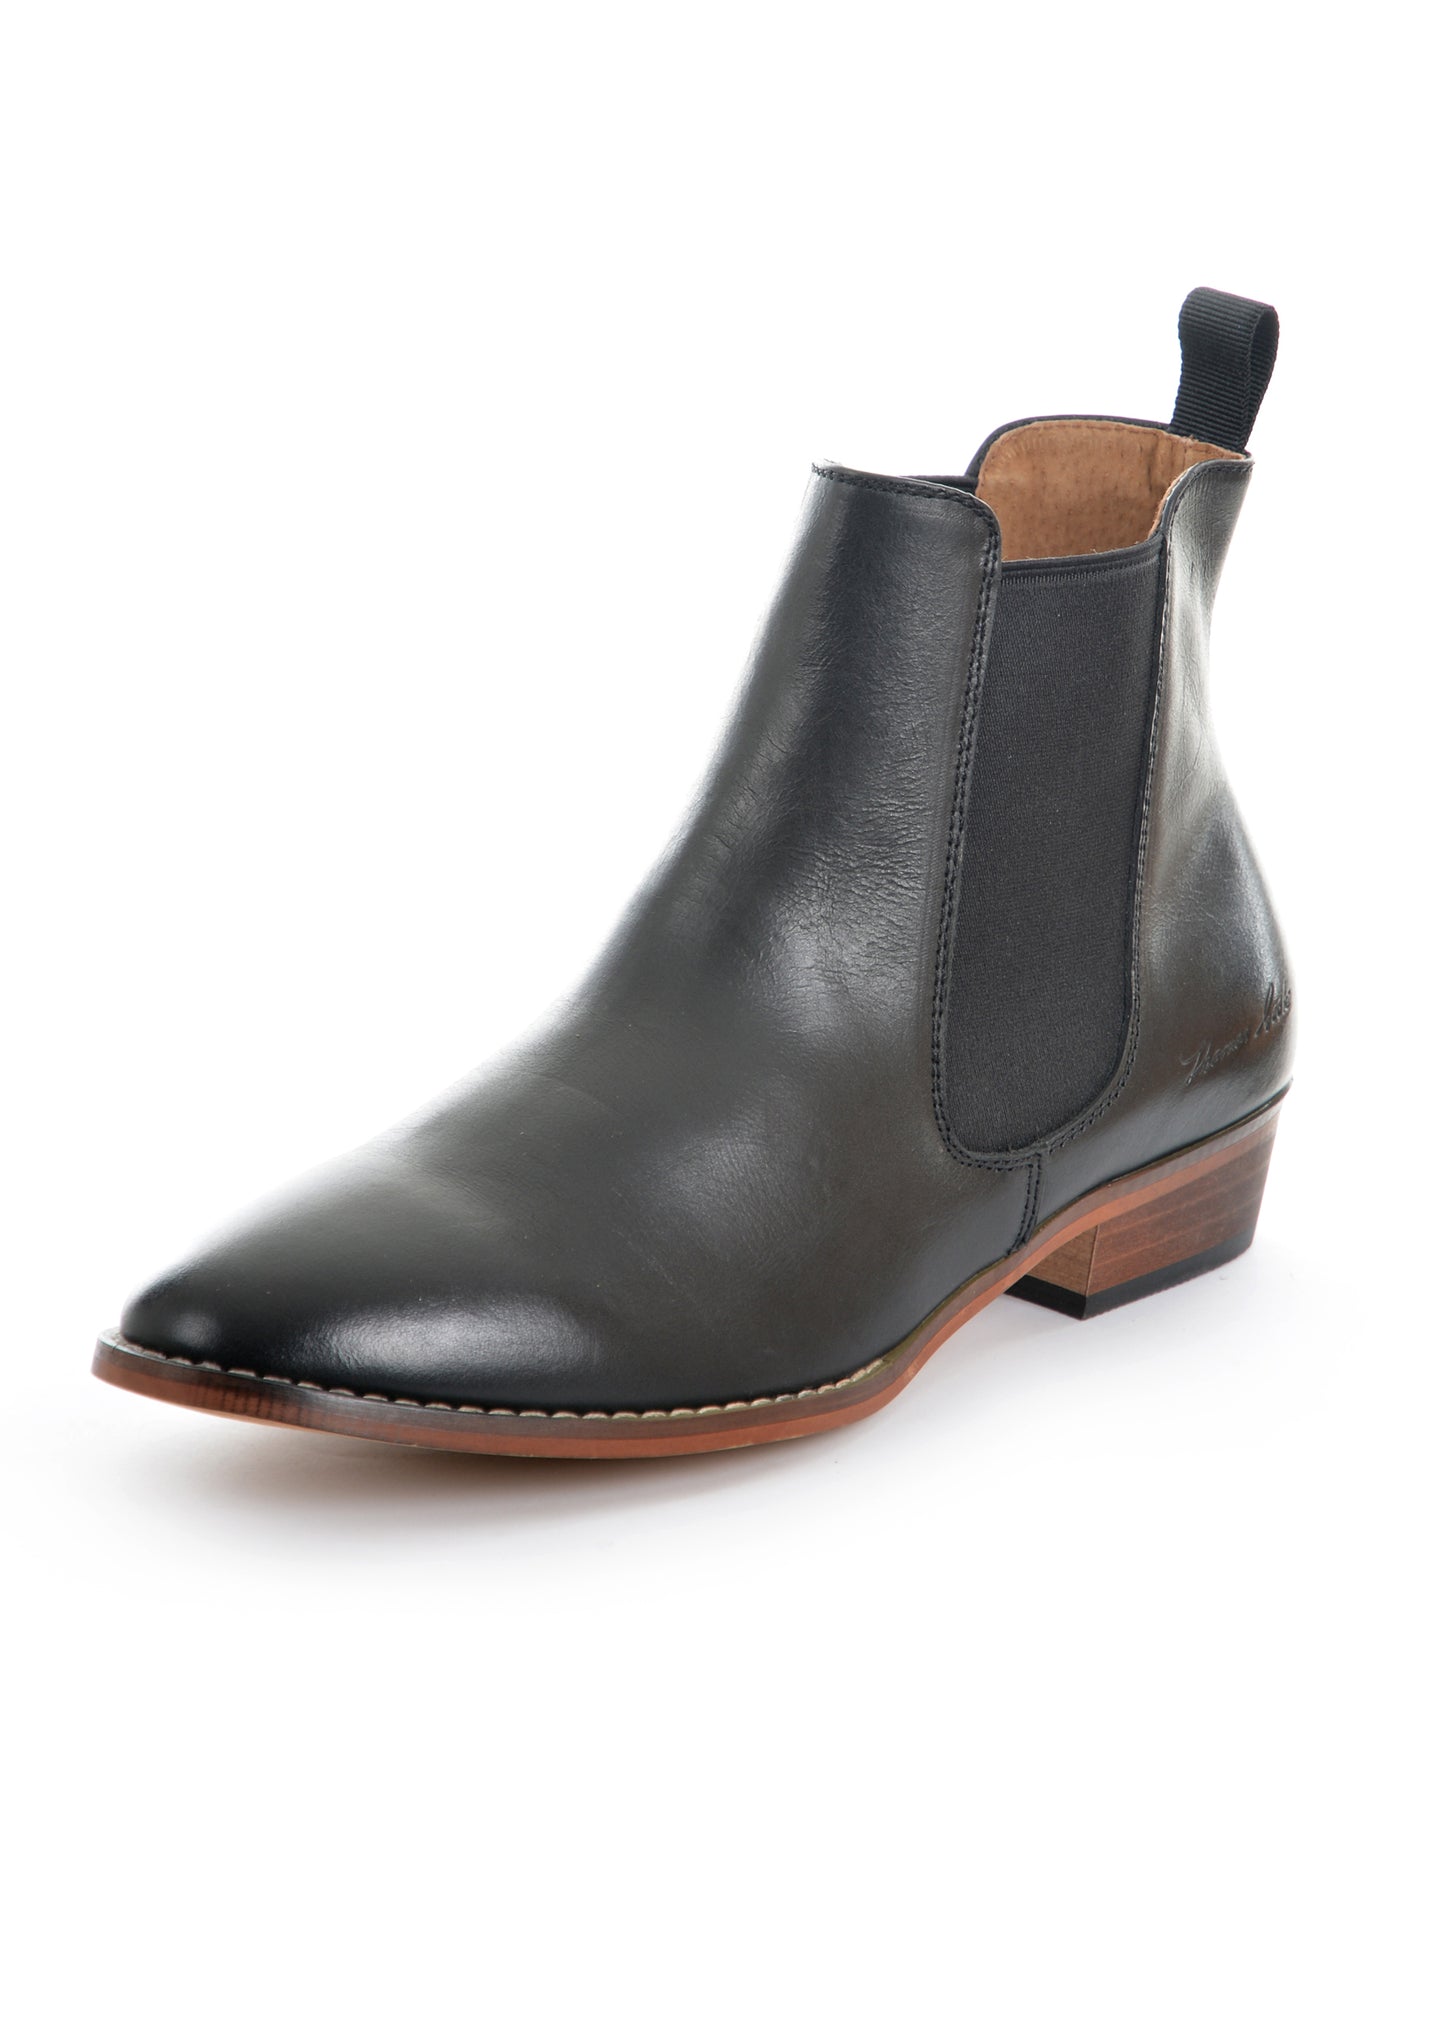 Thomas Cook Ladies Chelsea Boots - Black - TCP28319 - ON SALE